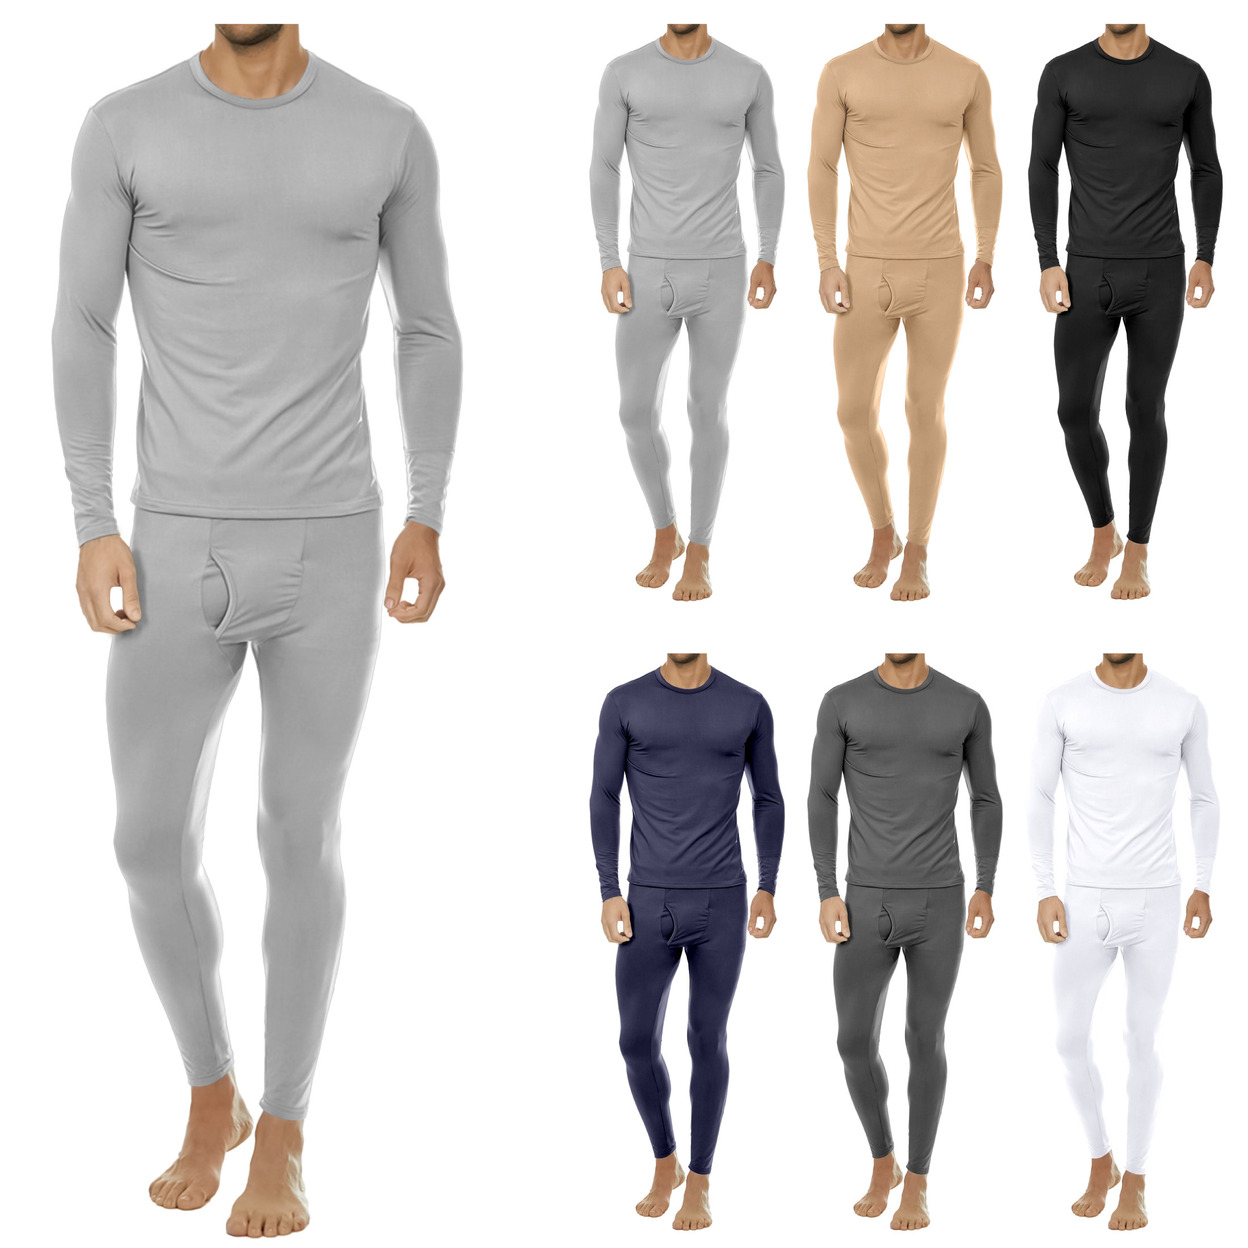 2-Sets: Men's Winter Warm Fleece Lined Thermal Underwear Set For Cold Weather - Black&grey, Medium